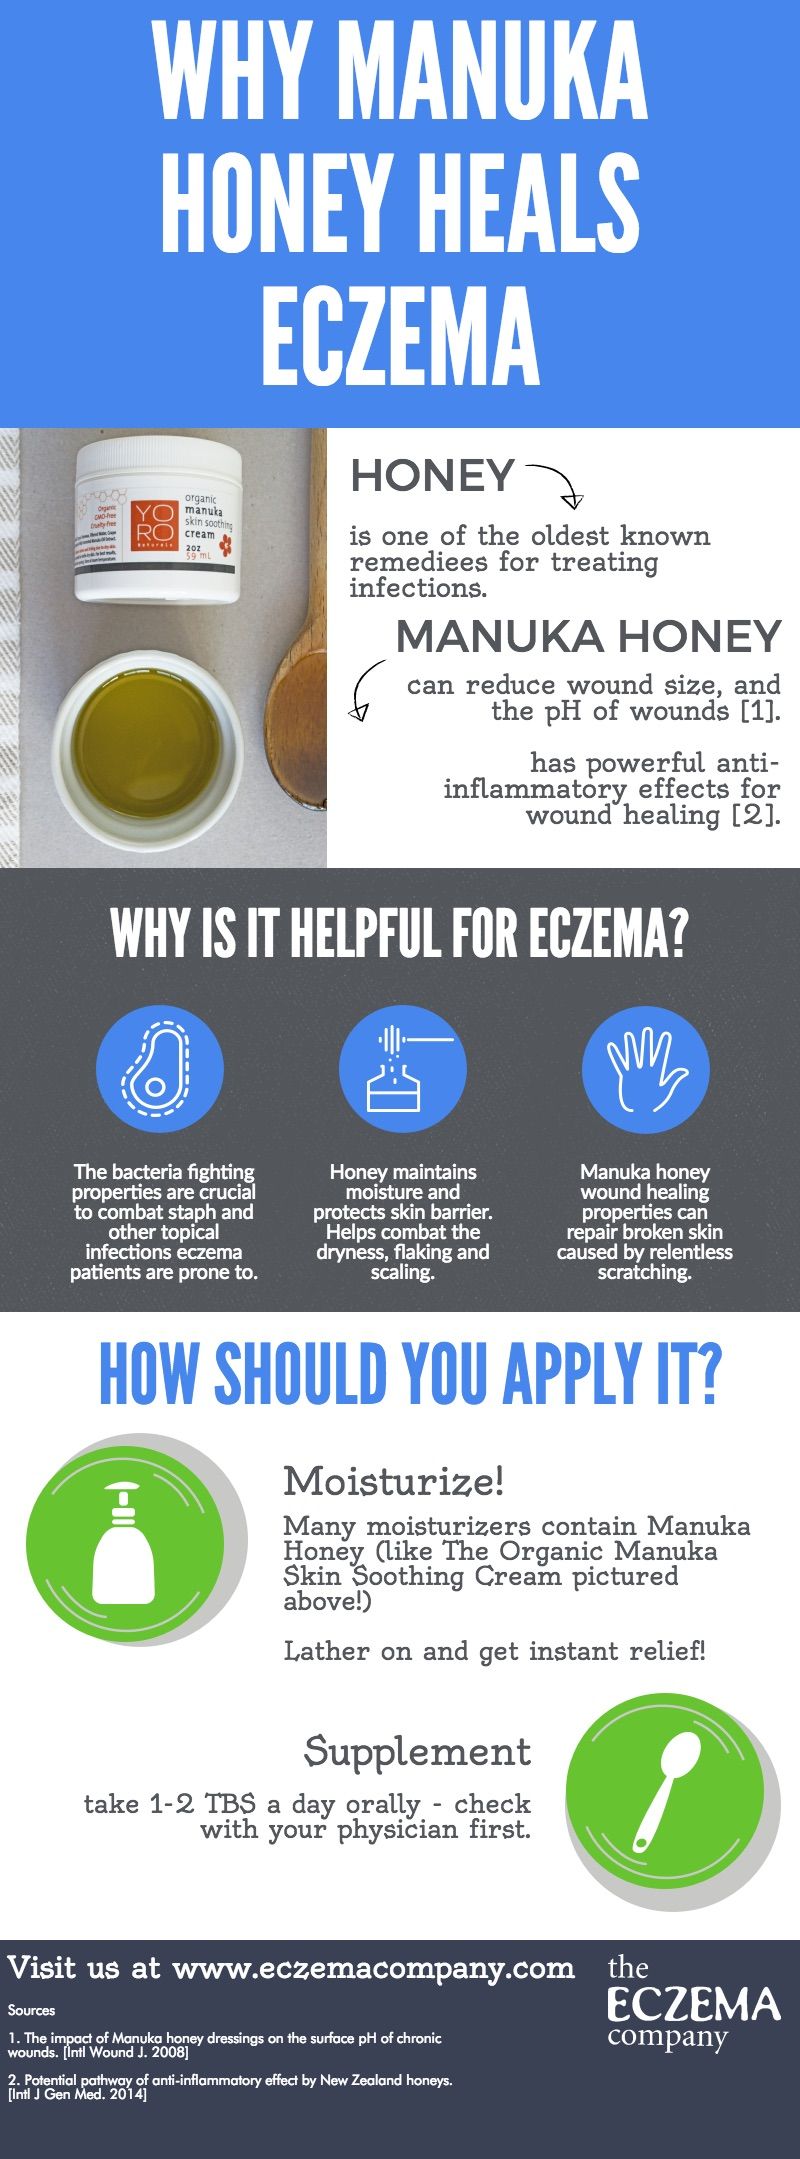 Why Manuka Honey Heals Eczema